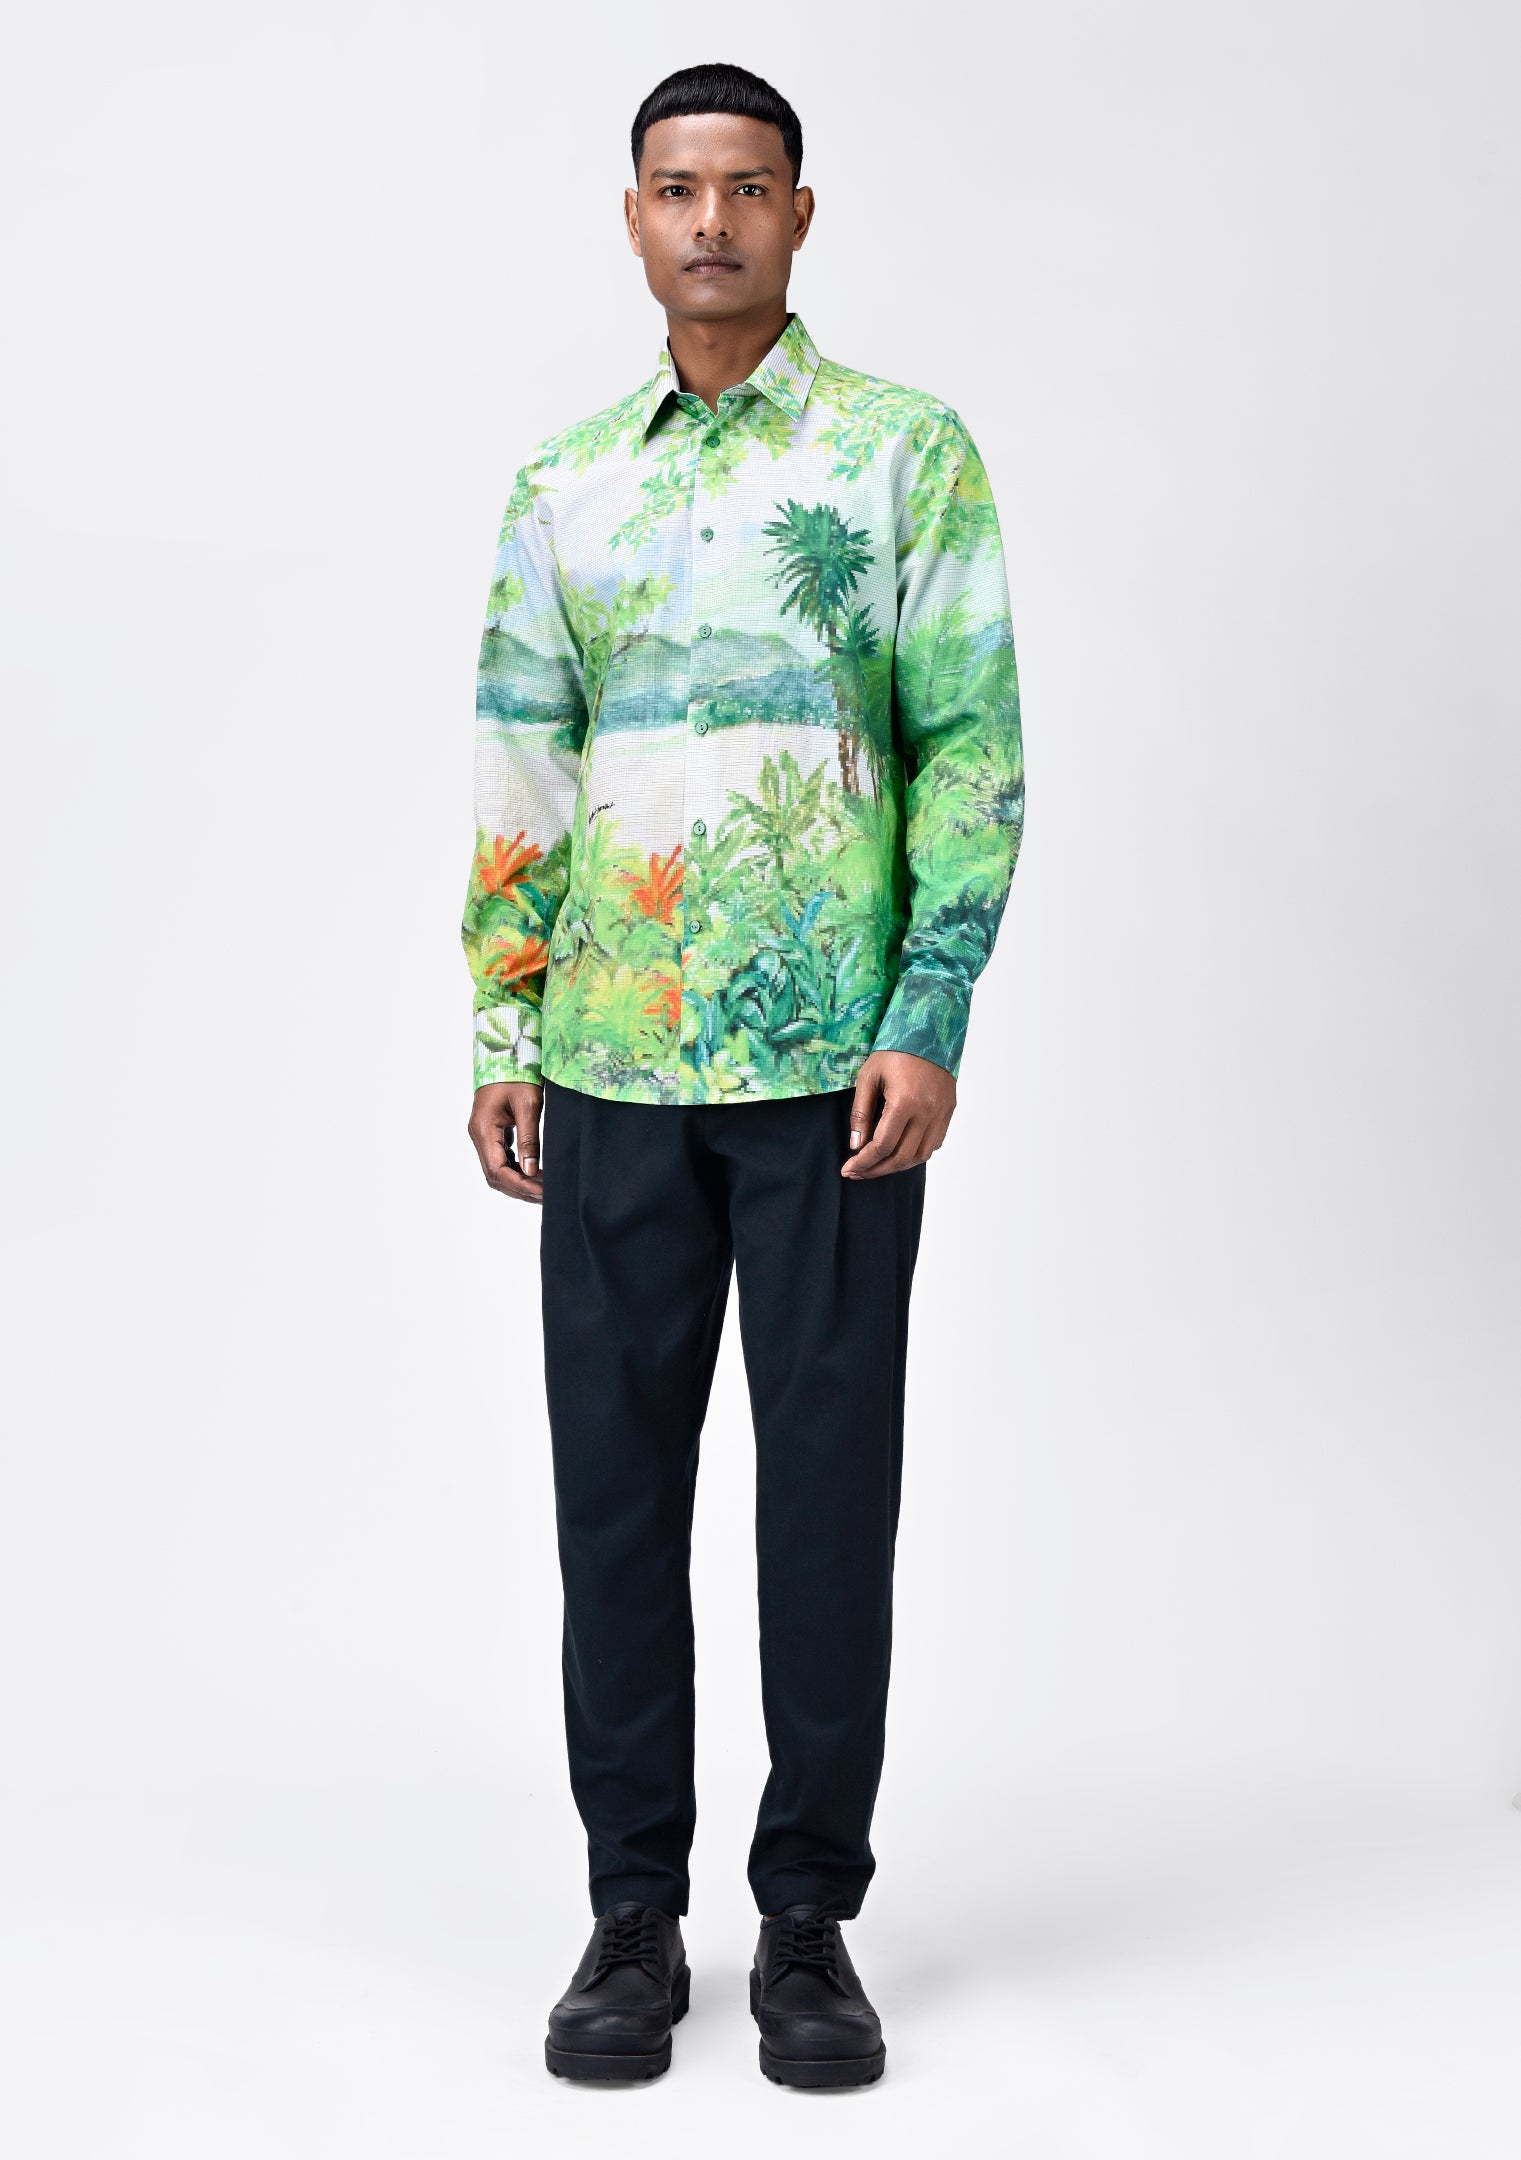 Men's Full Sleeve Shirt with Landscape Print